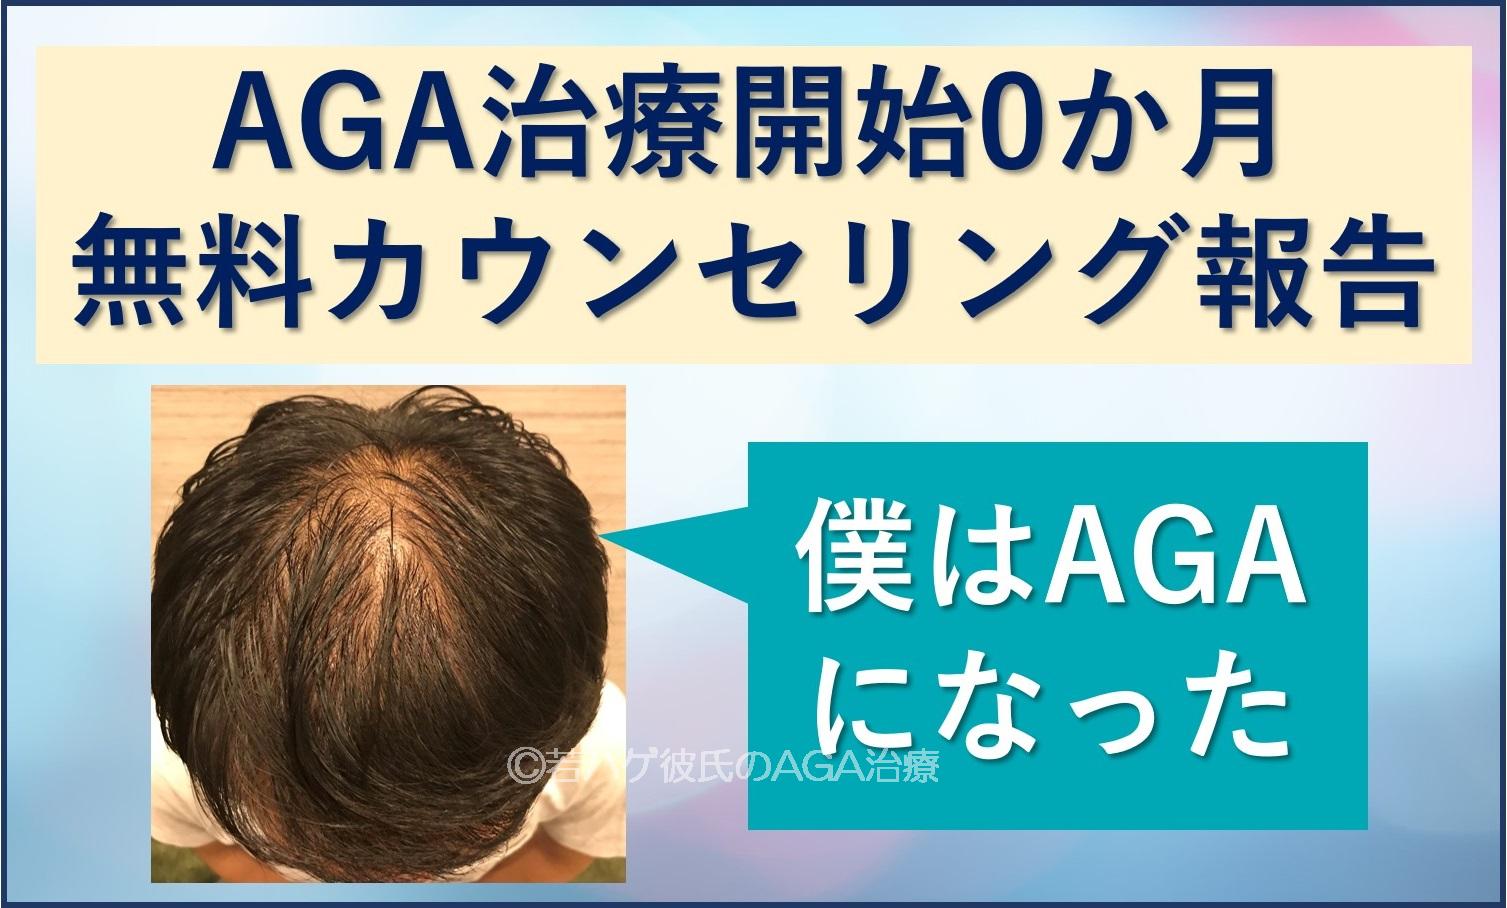 AGA治療開始0か月